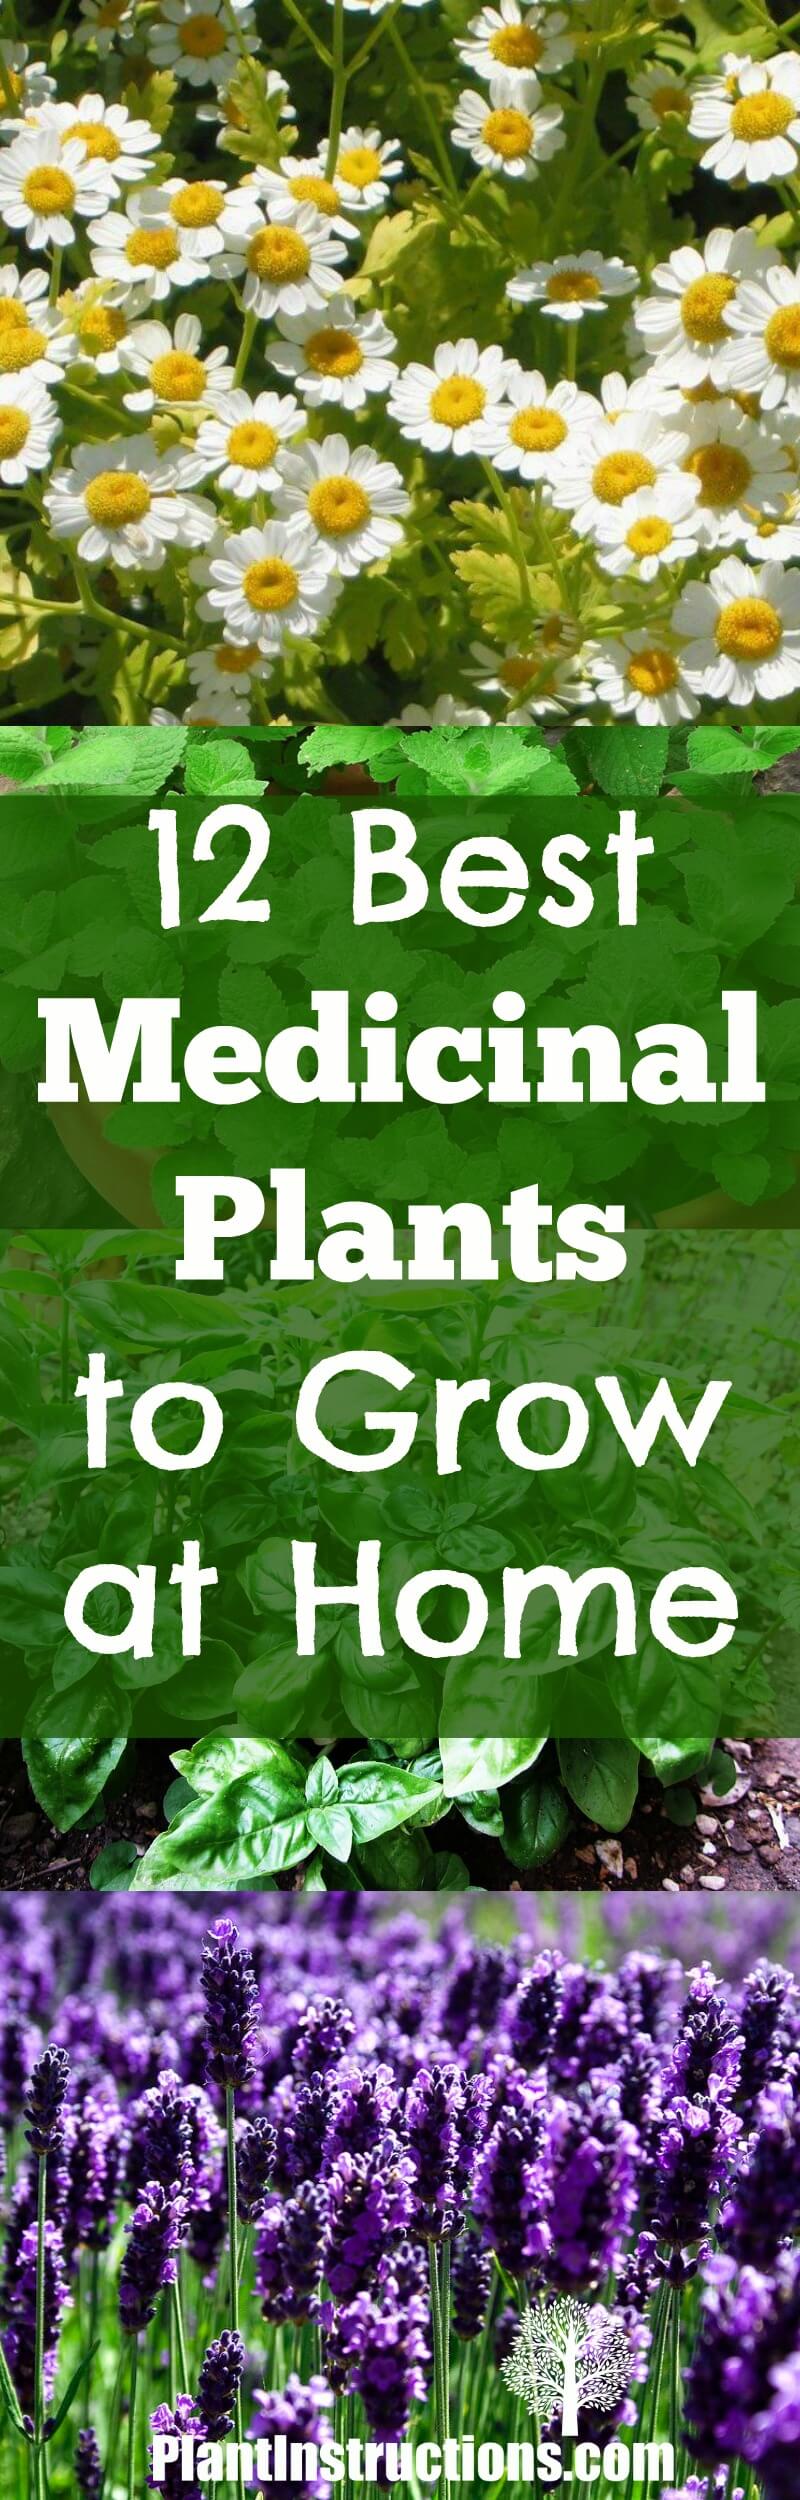 medicinal plants to grow at home